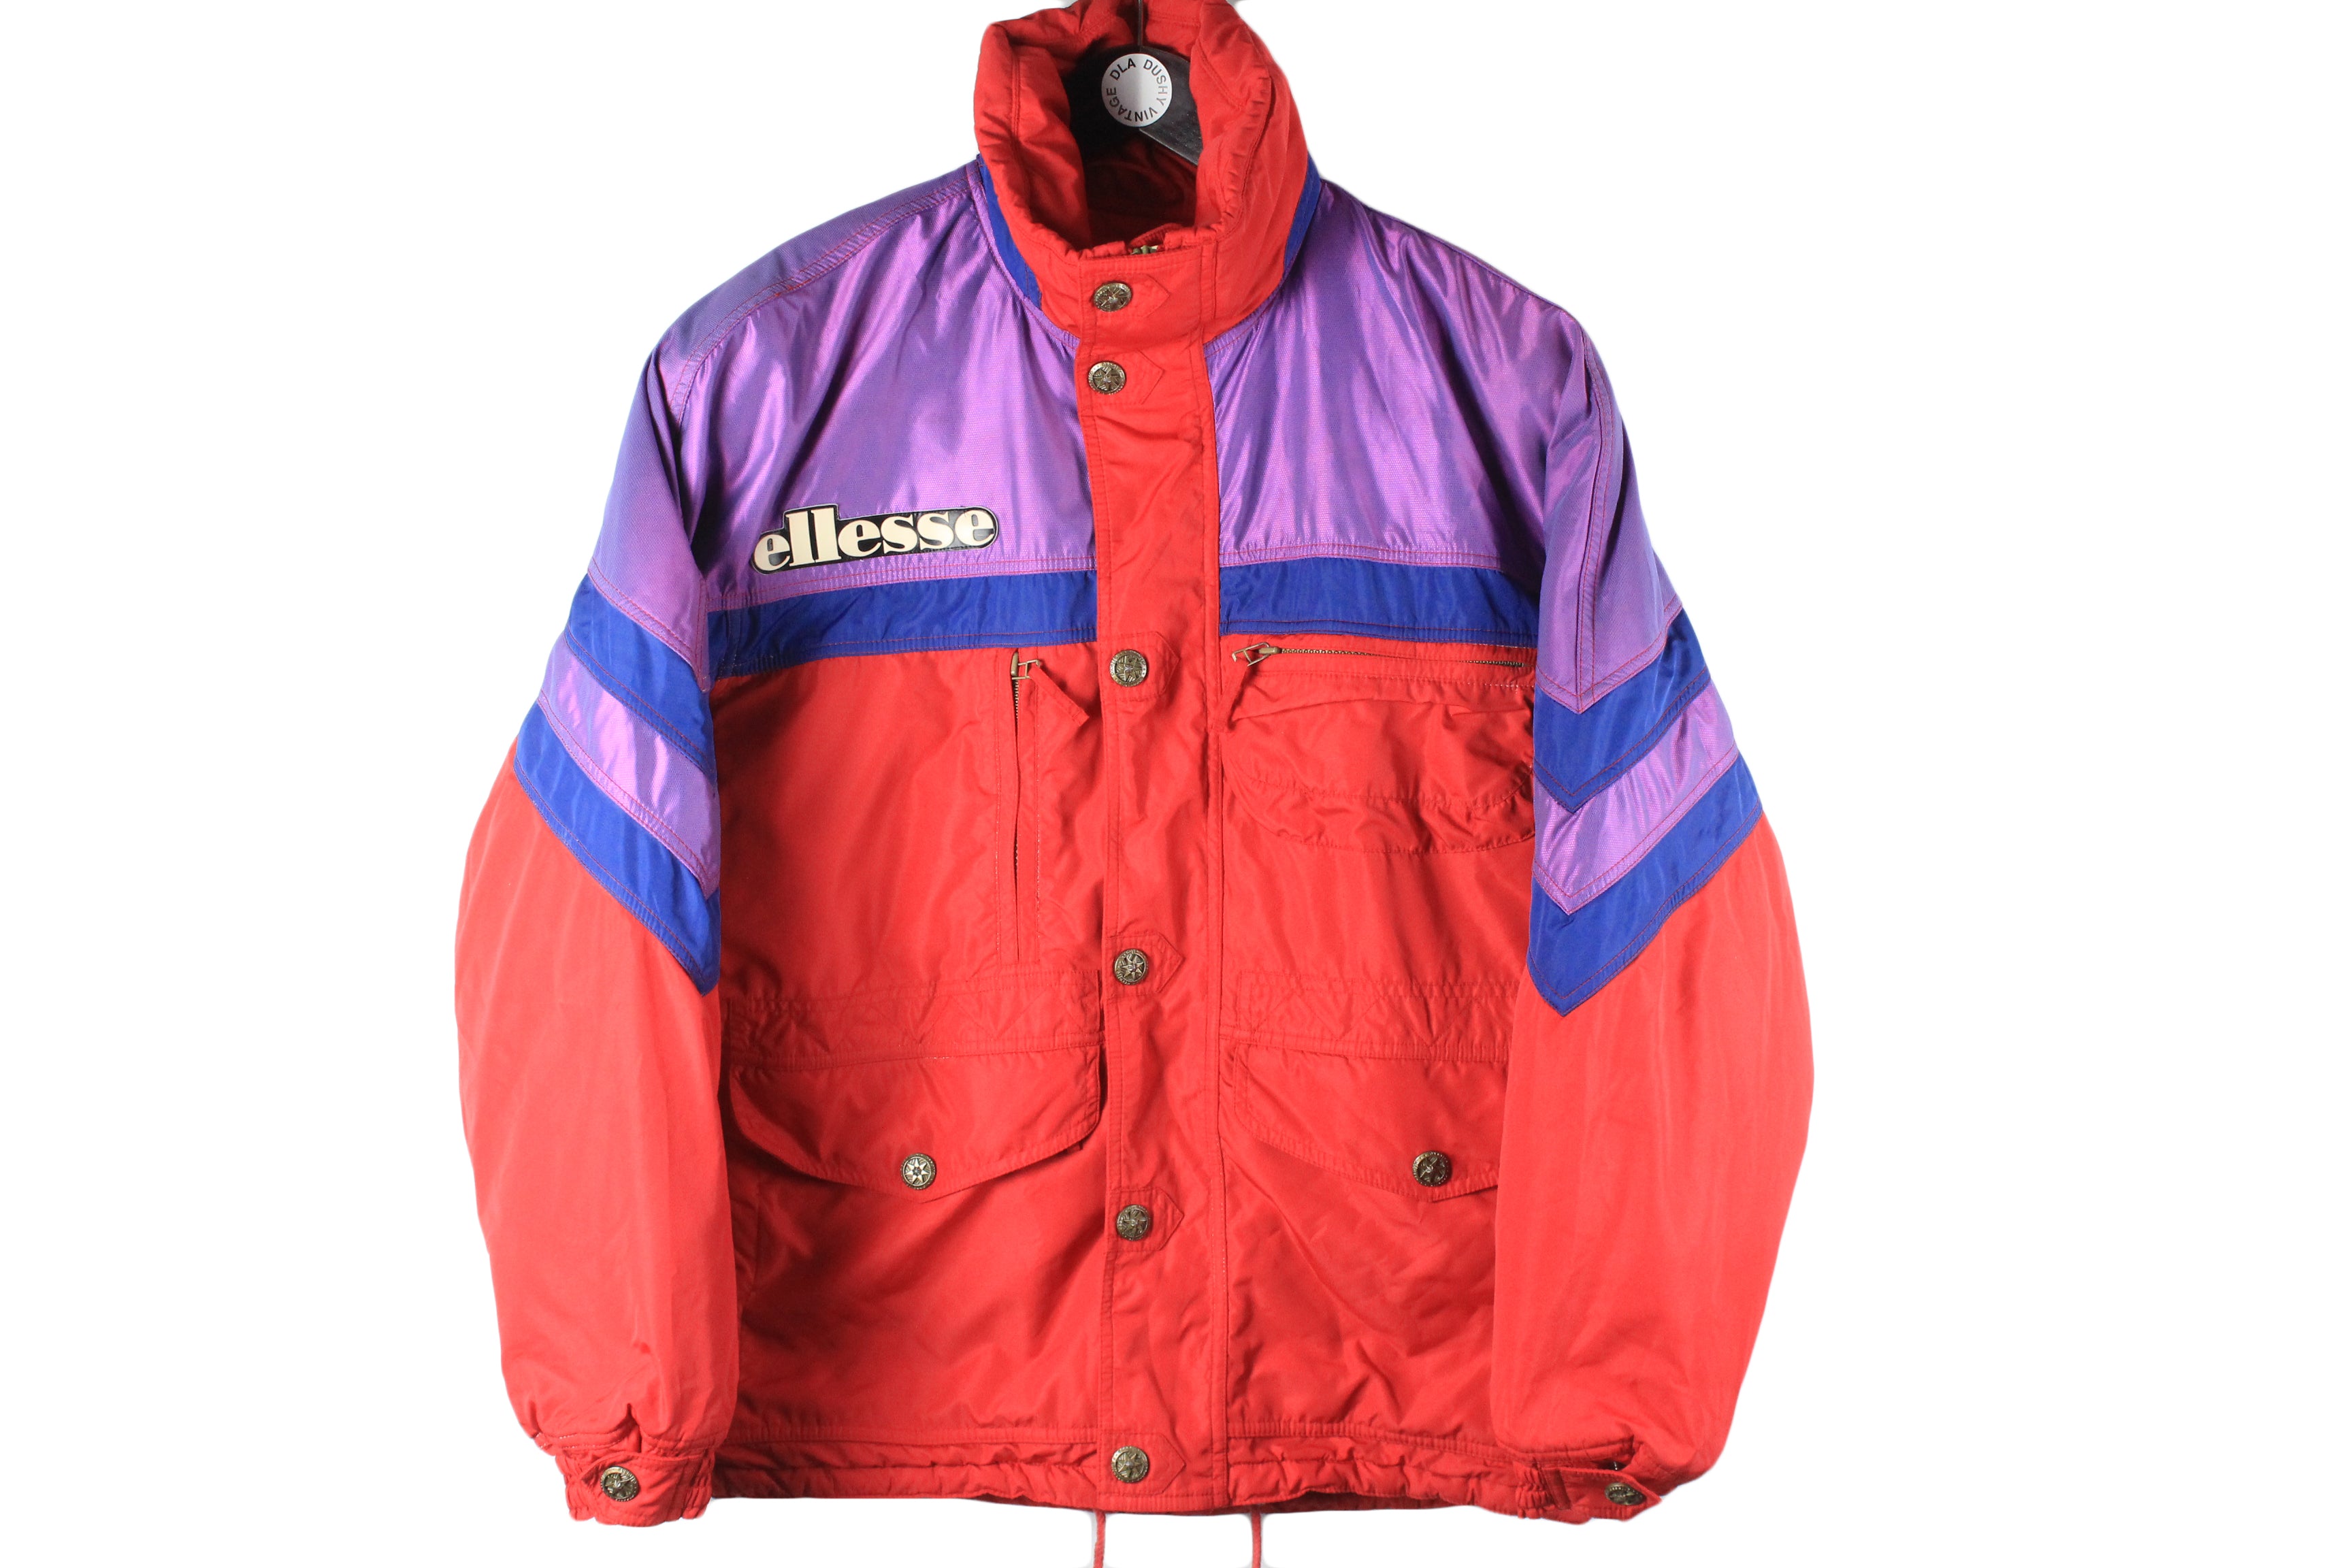 Ellesse ski heritage clothing range design- Uni brief :: Behance